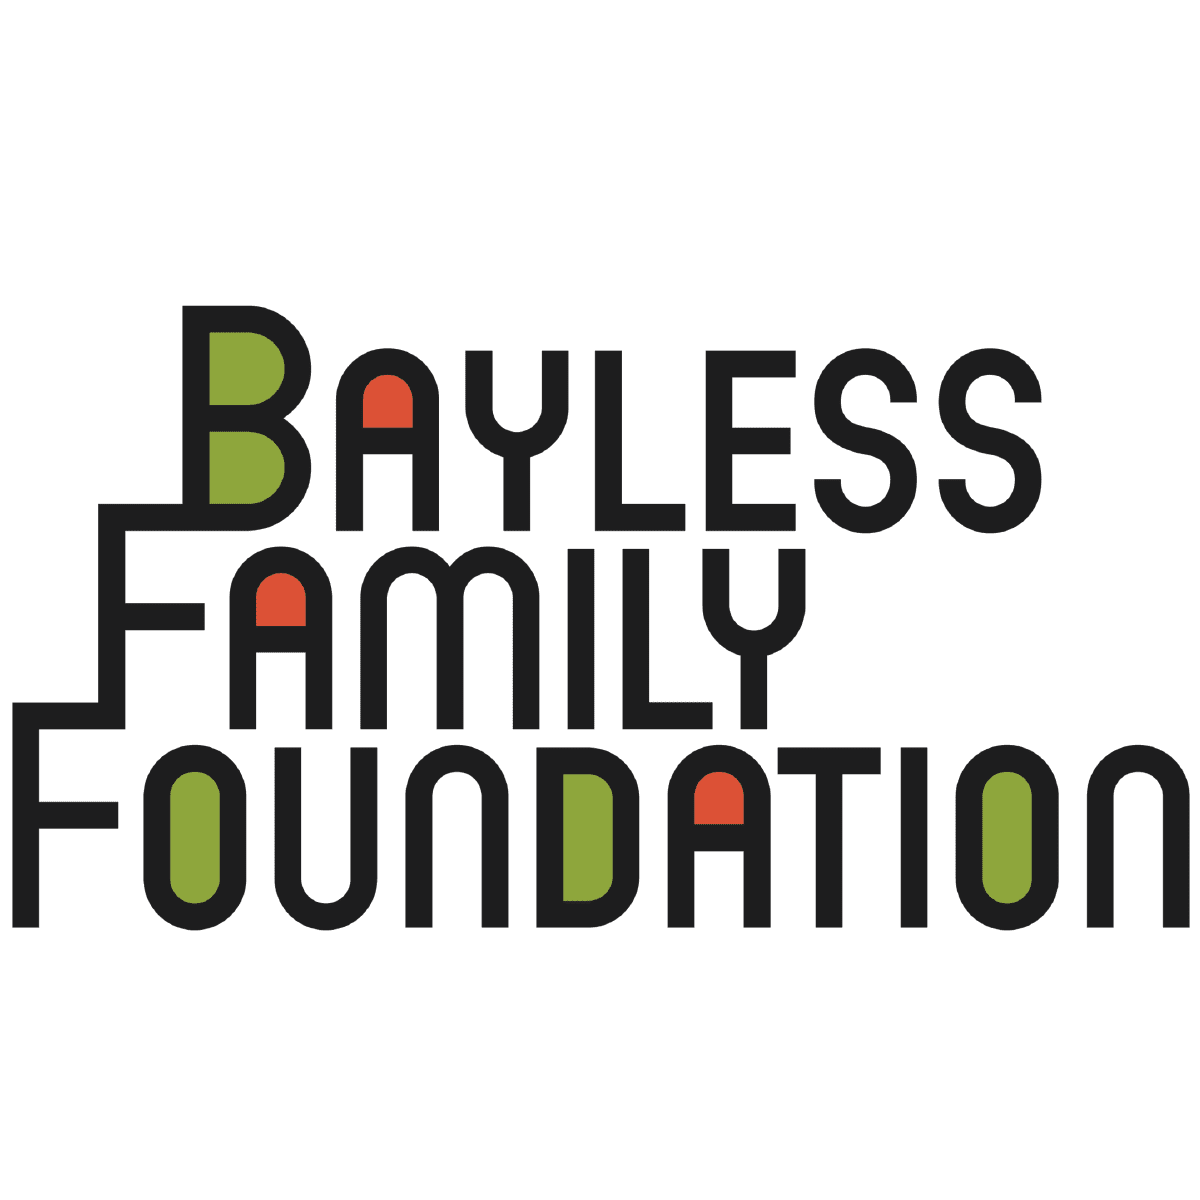 Bayless Family Foundation logo